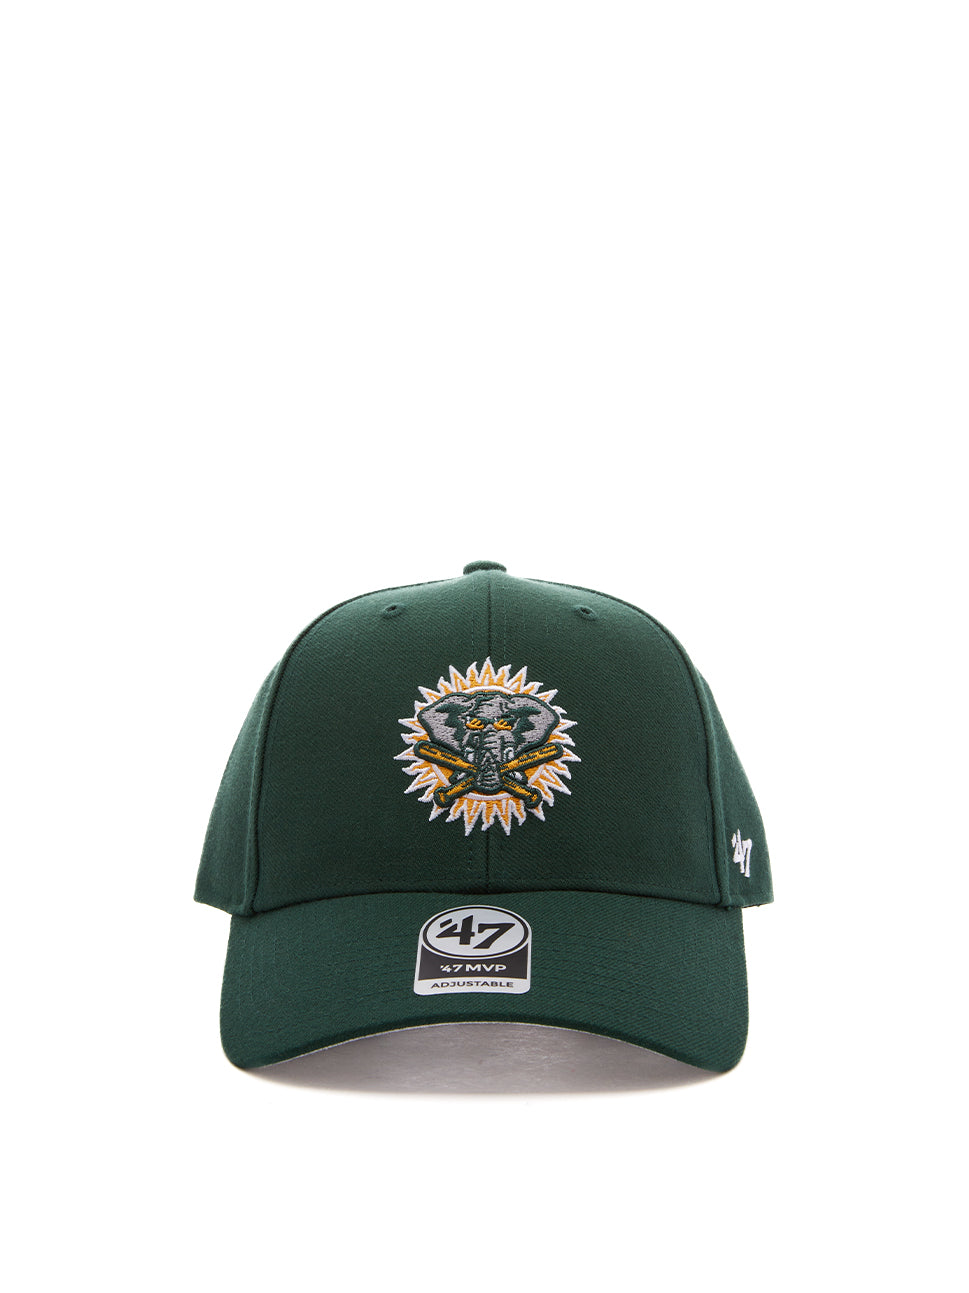 47 Los Angeles Dodgers MLB Baseball Cap Dark Maroon MVP Brand Adjustable Hat